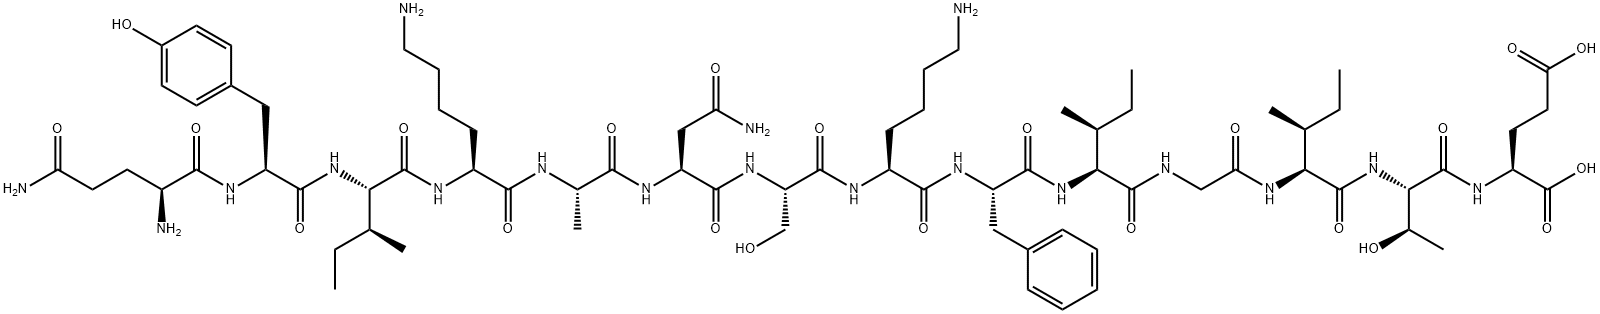 Tetanus toxin (830-843)